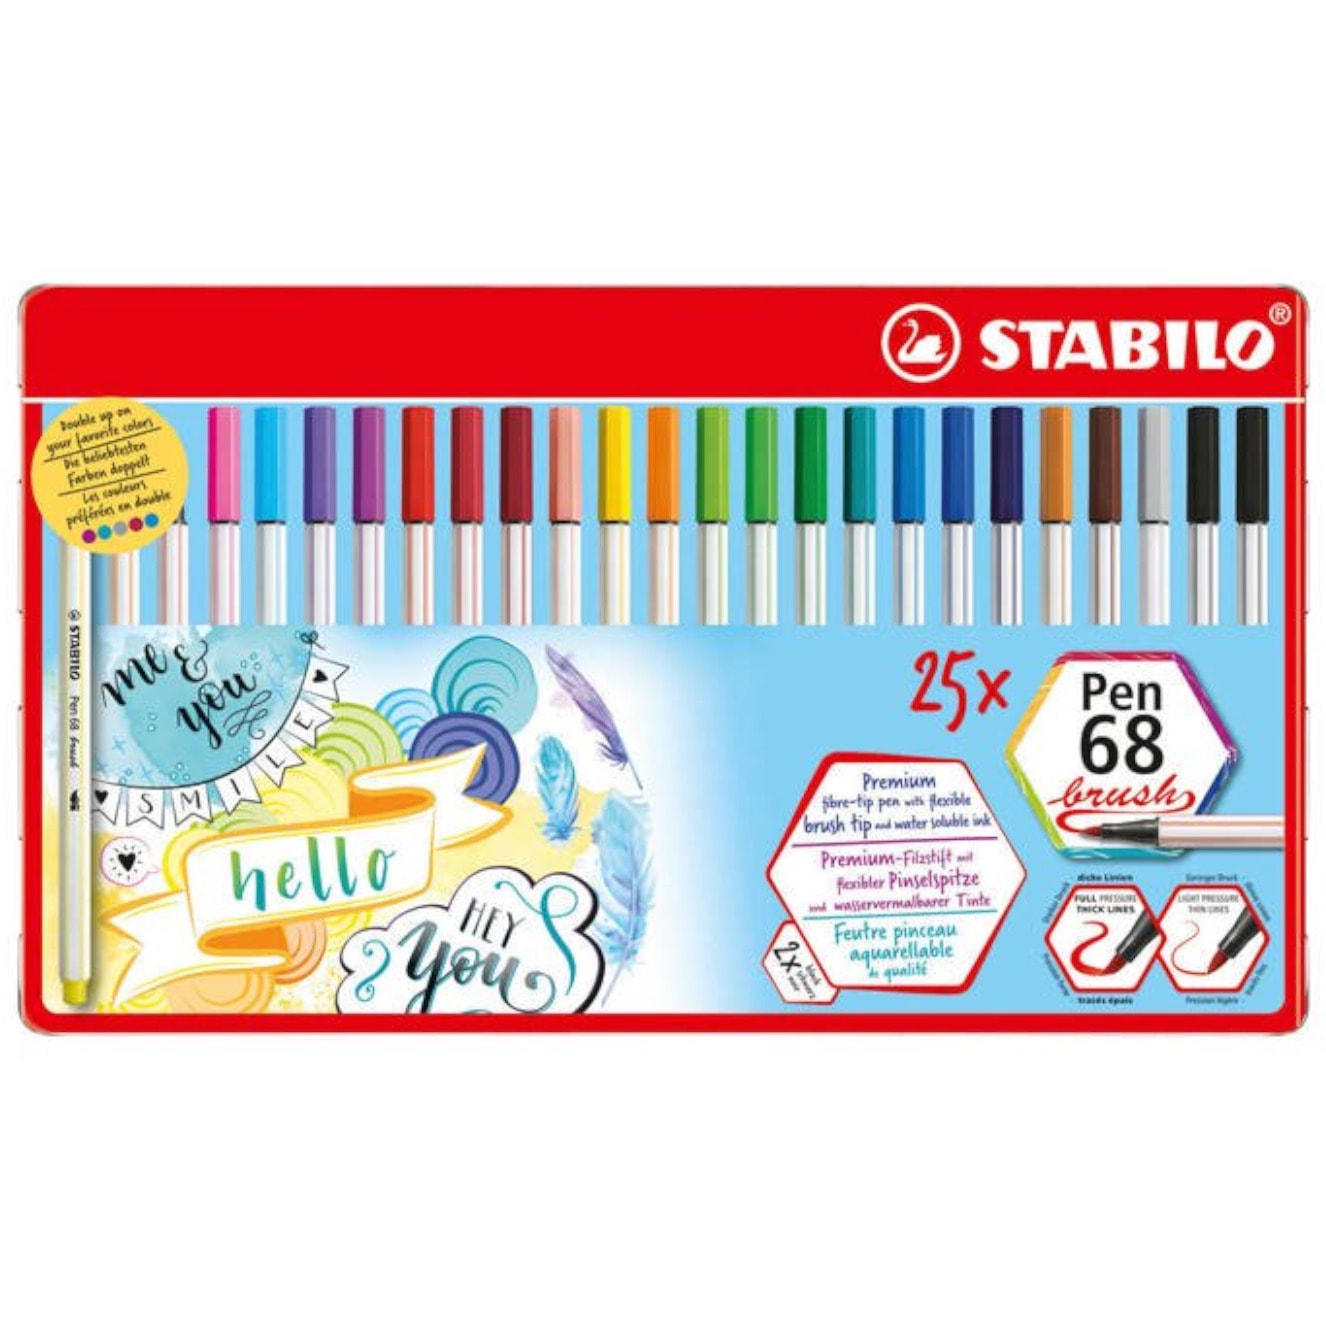 Mixed set of felt-tip pen STABILO Pen 68, fineliner STABILO point 88 and  brush pen STABILO Pen 68 brush I STABILO